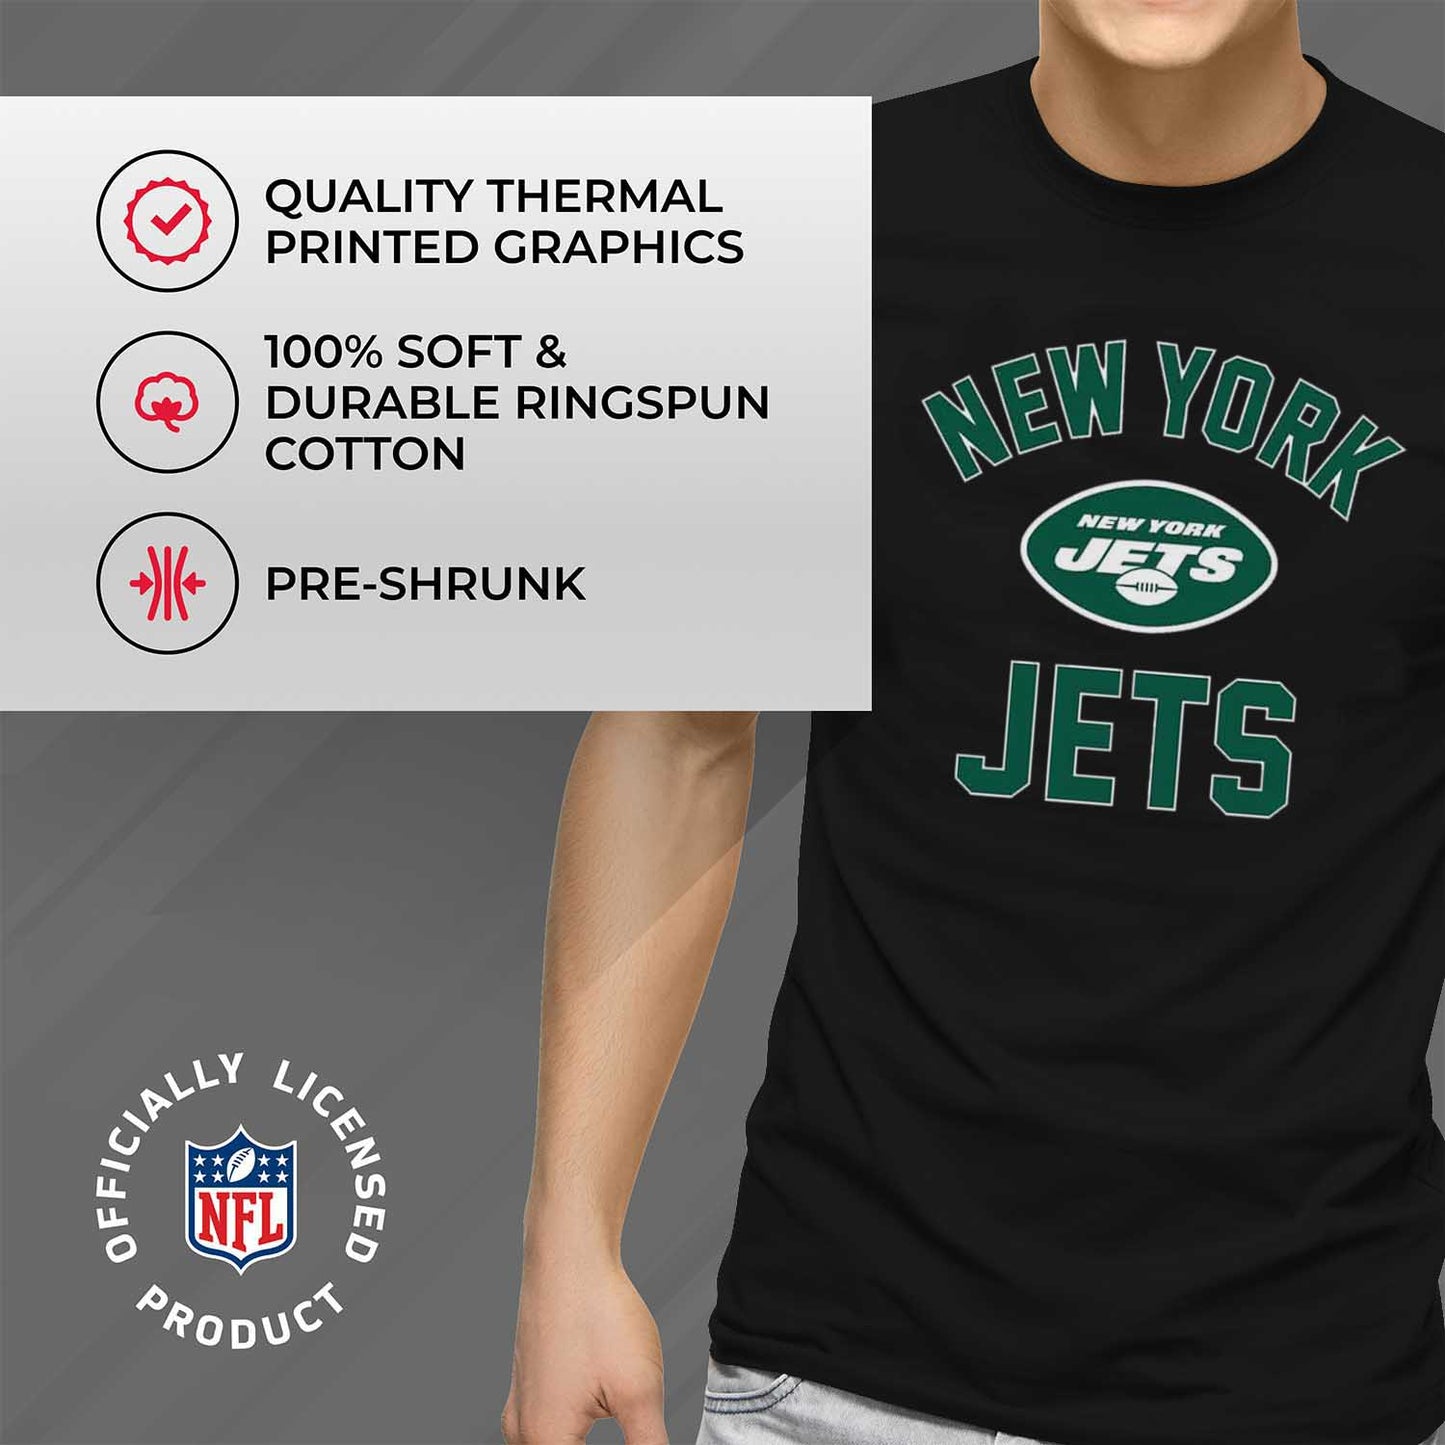 New York Jets NFL Adult Gameday T-Shirt - Black